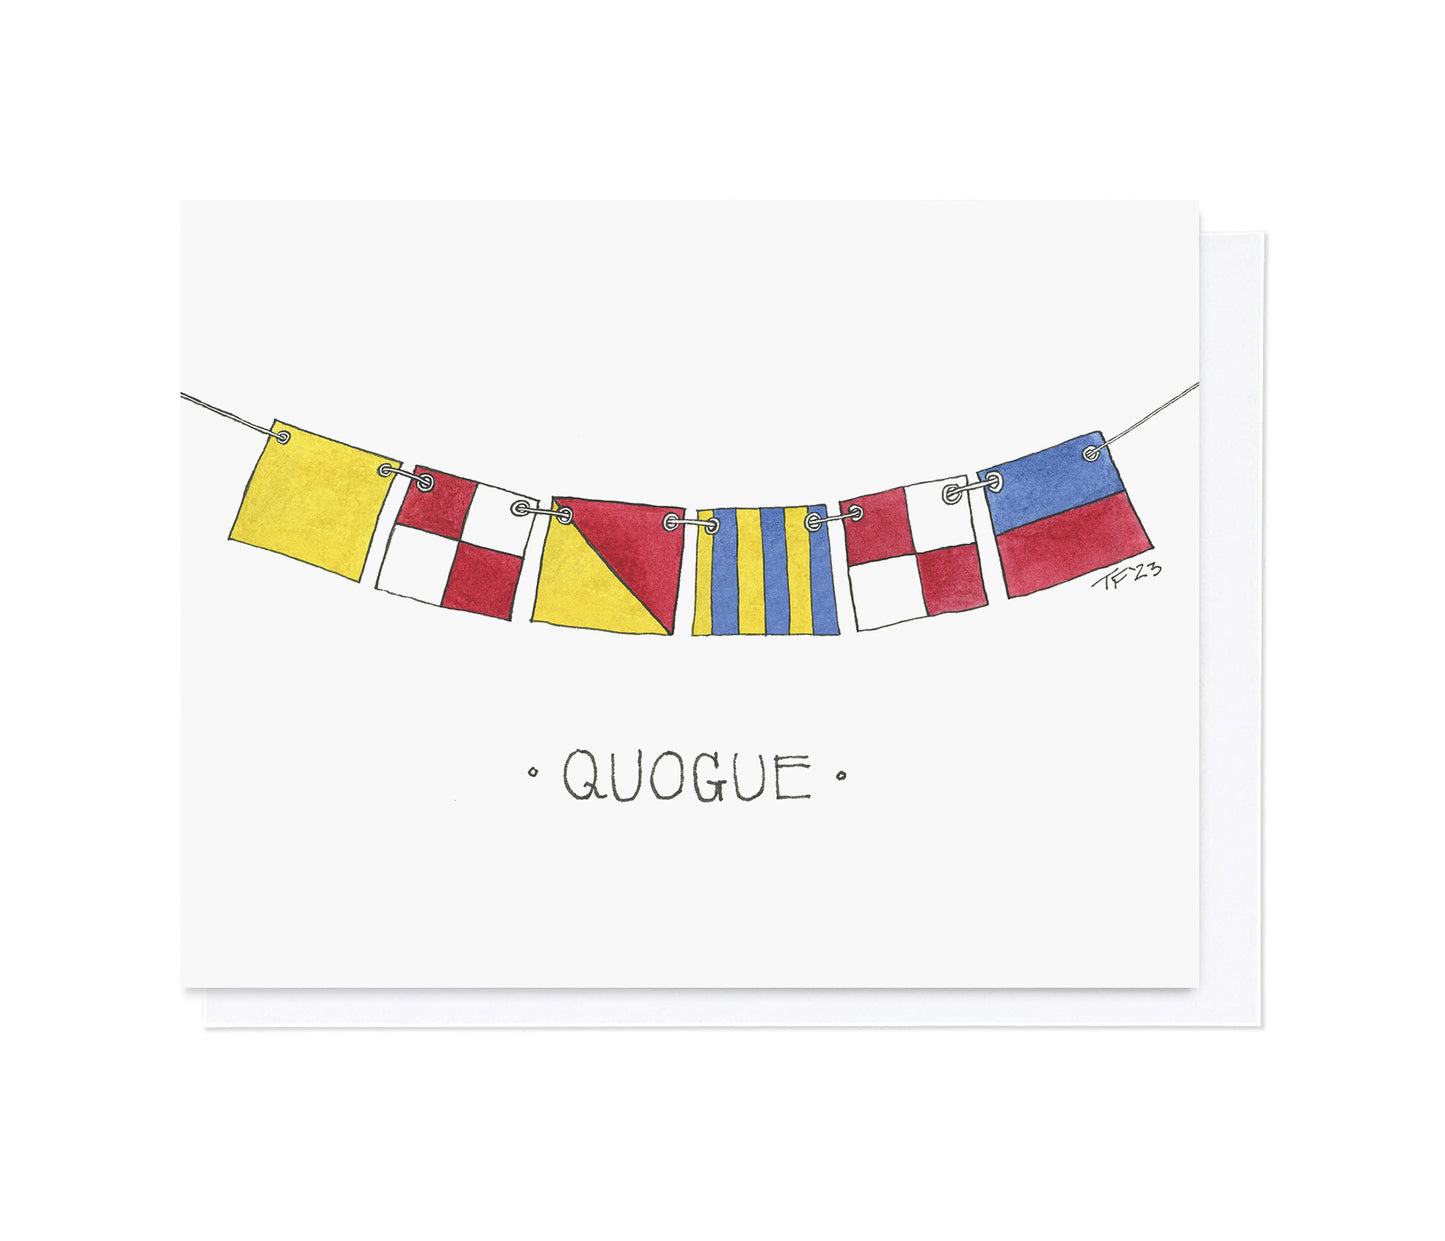 OC 007 - Quogue in Nautical Flags